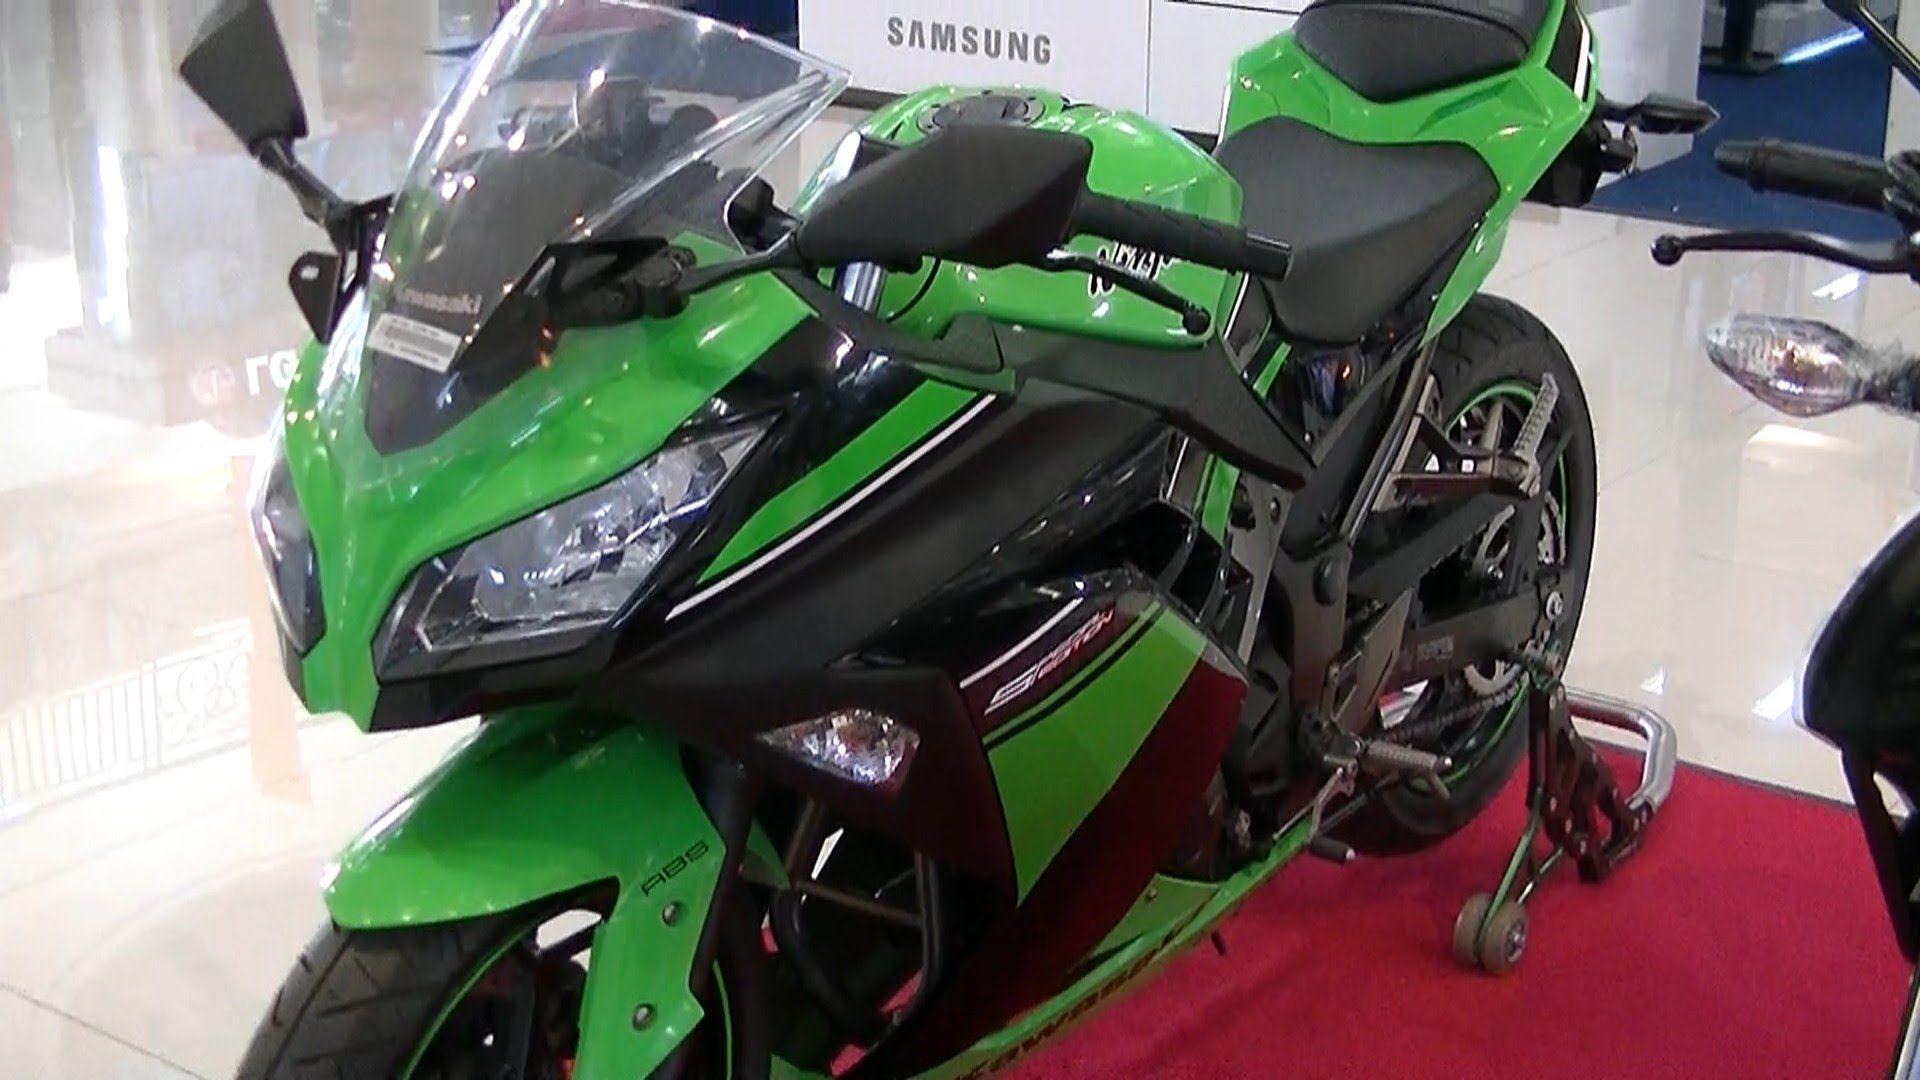 Kawasaki Ninja 250 ABS KRT Edition By New Motorcycle 2016 06 08